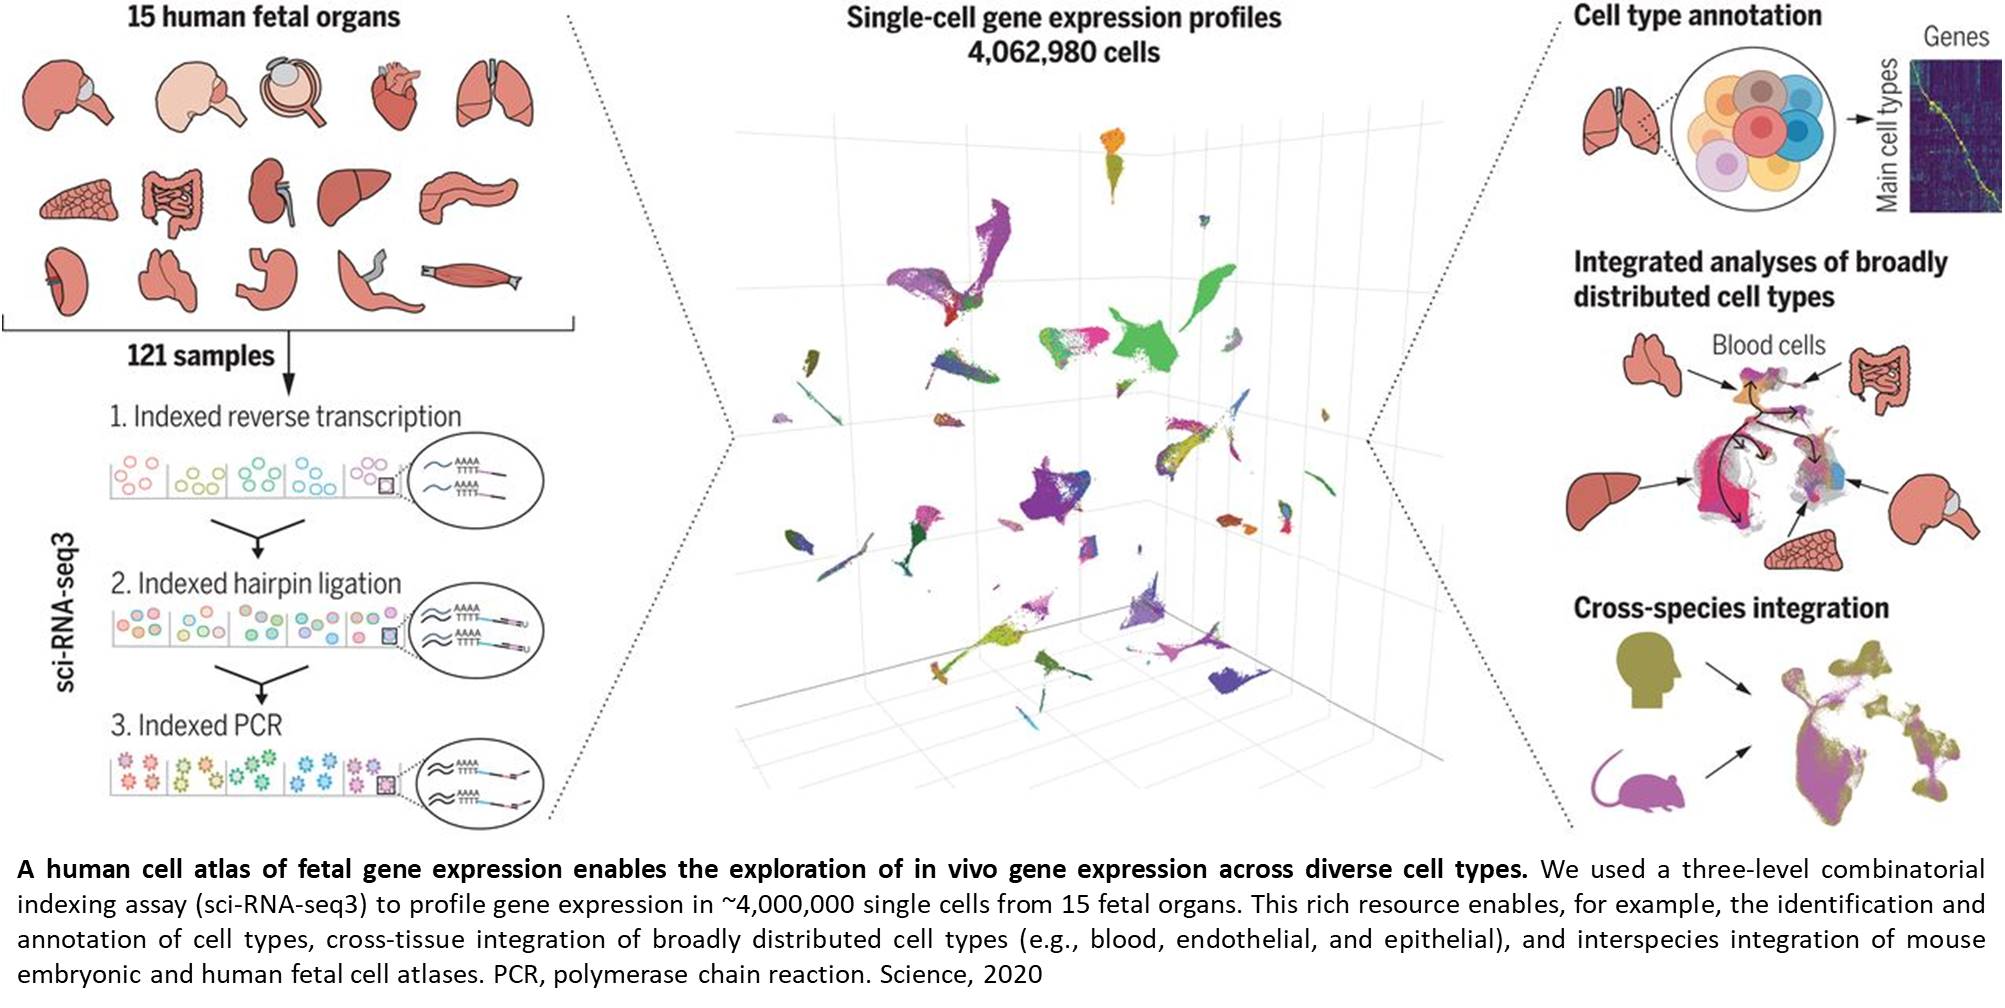 Developmental atlas of human cell gene expression